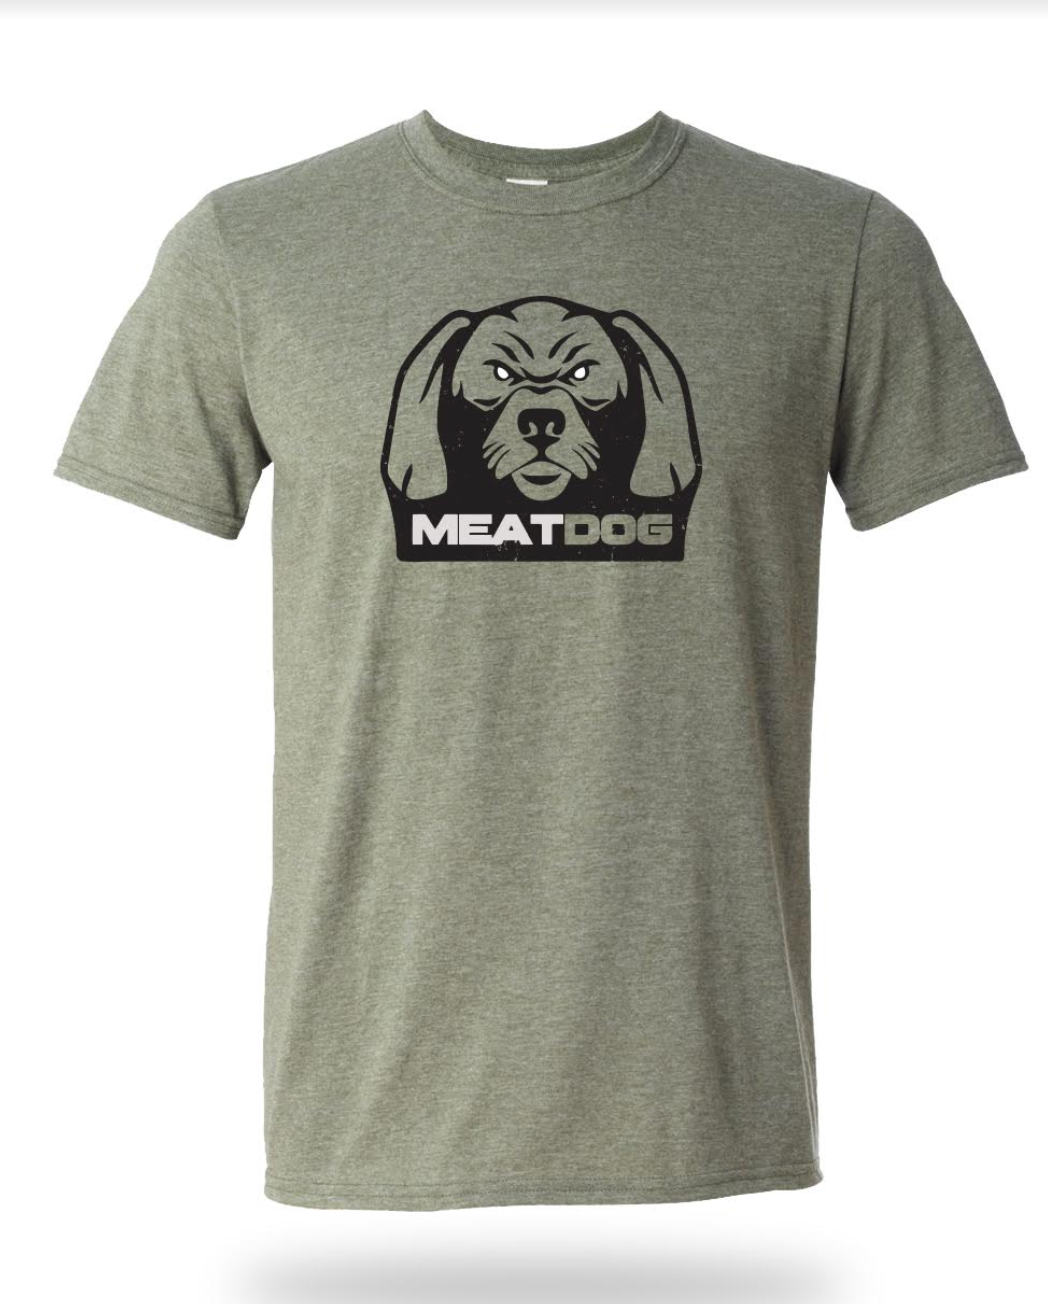 MEATDOG Logo and Text Shirt